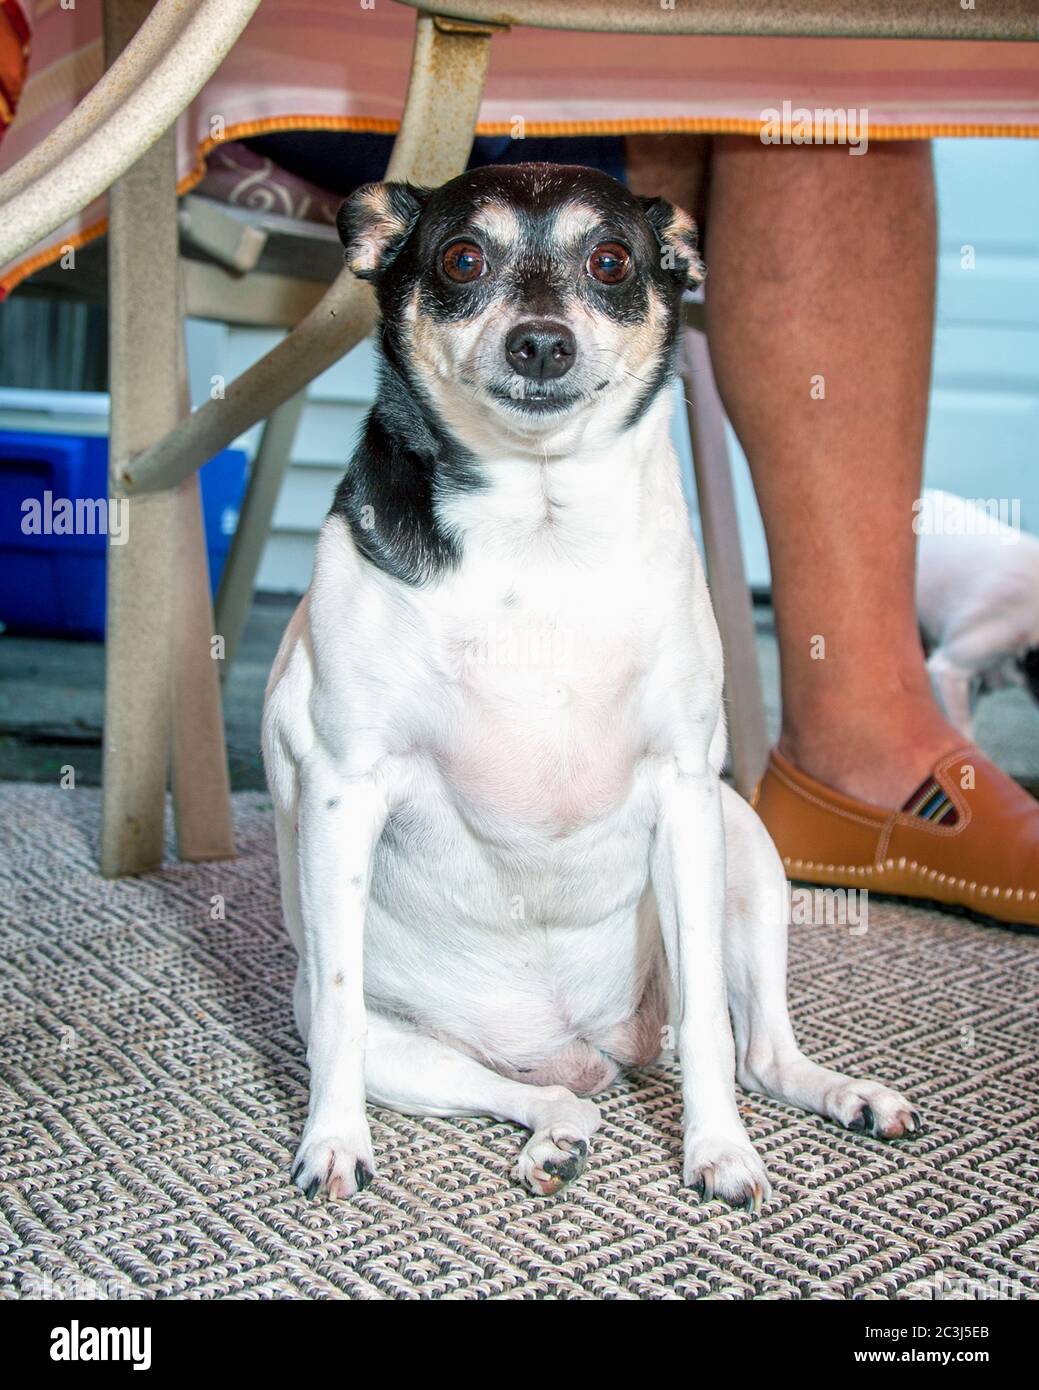 Weird little dog sitting under table Stock Photo